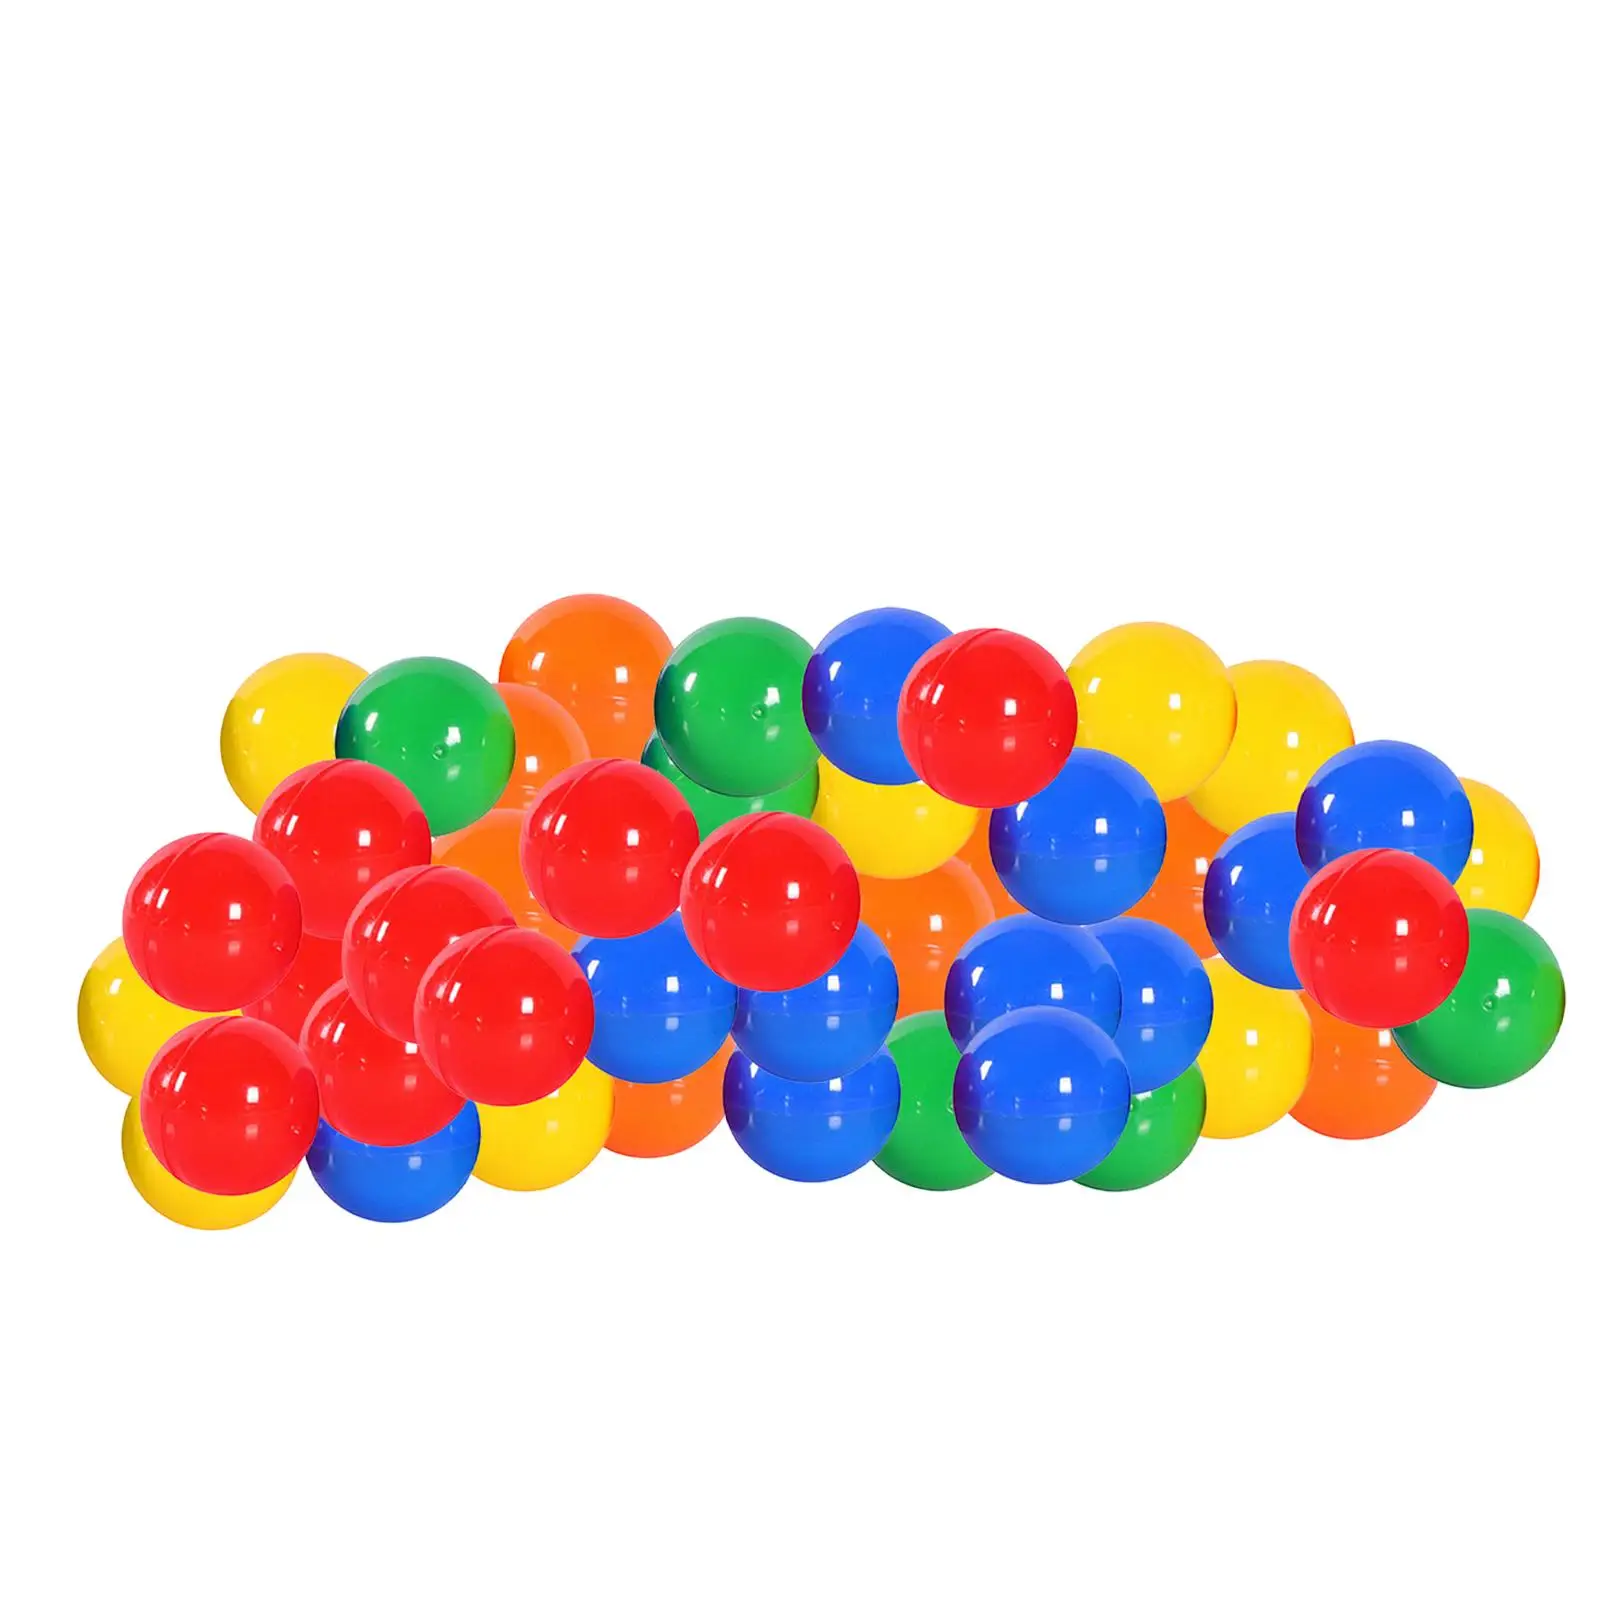 50 Pieces Bingo Ball Raffle Balls Durable Devices Direct Replaces Tally Ball